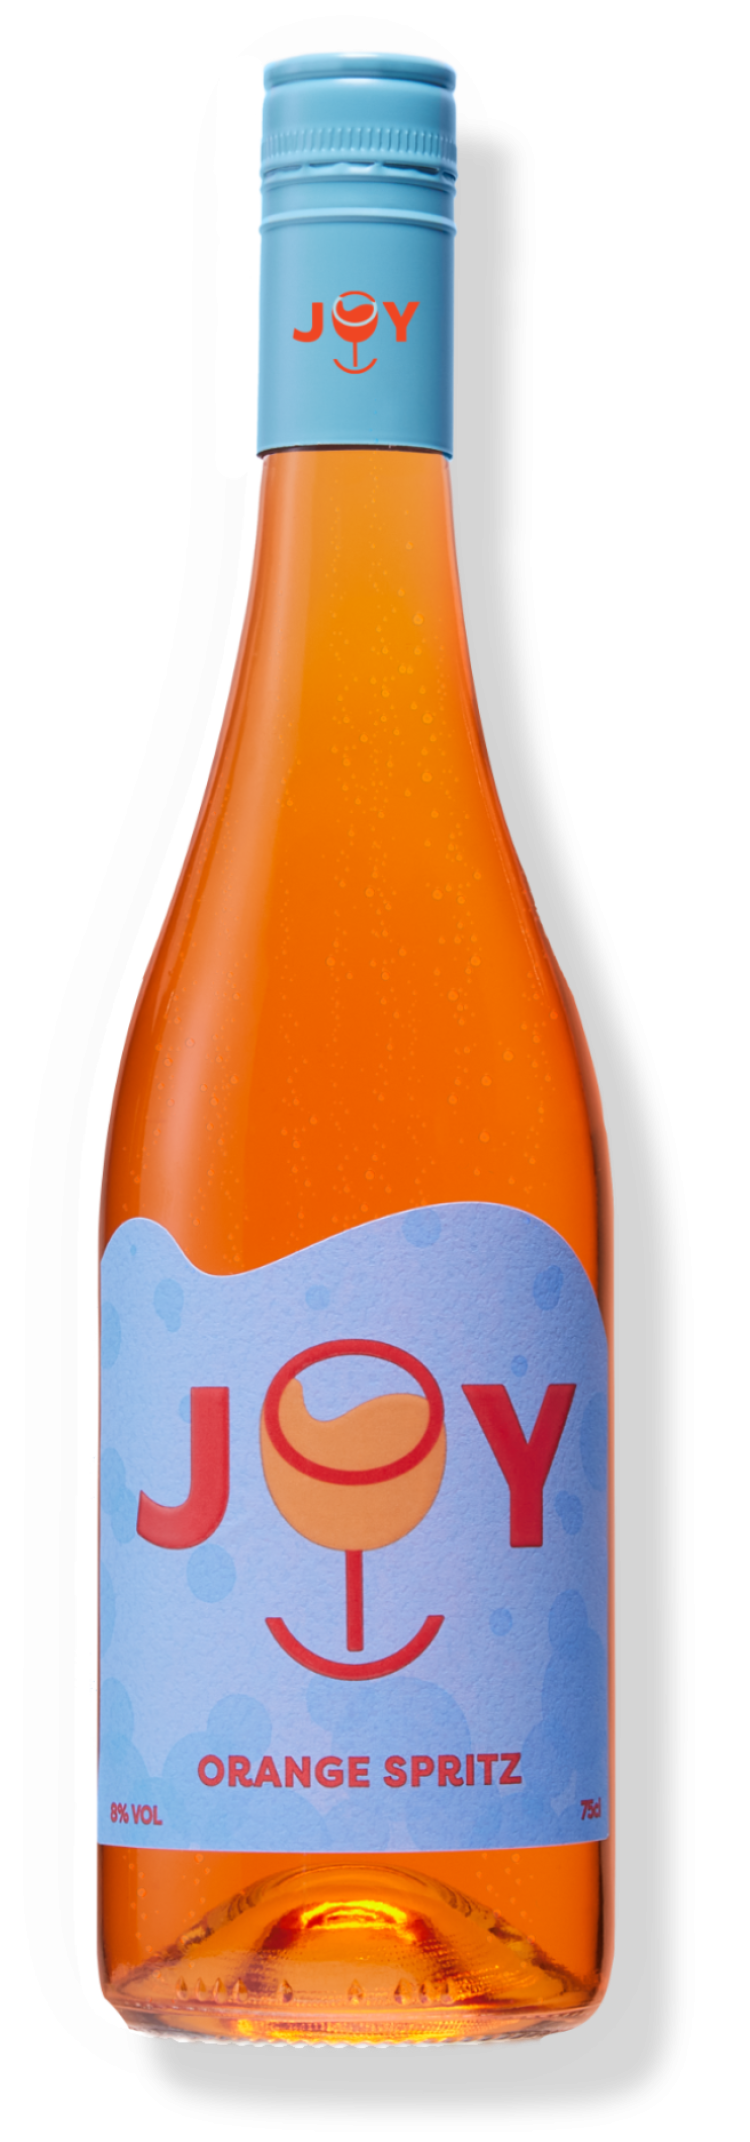 A bottle of JOY Orange Spritz.